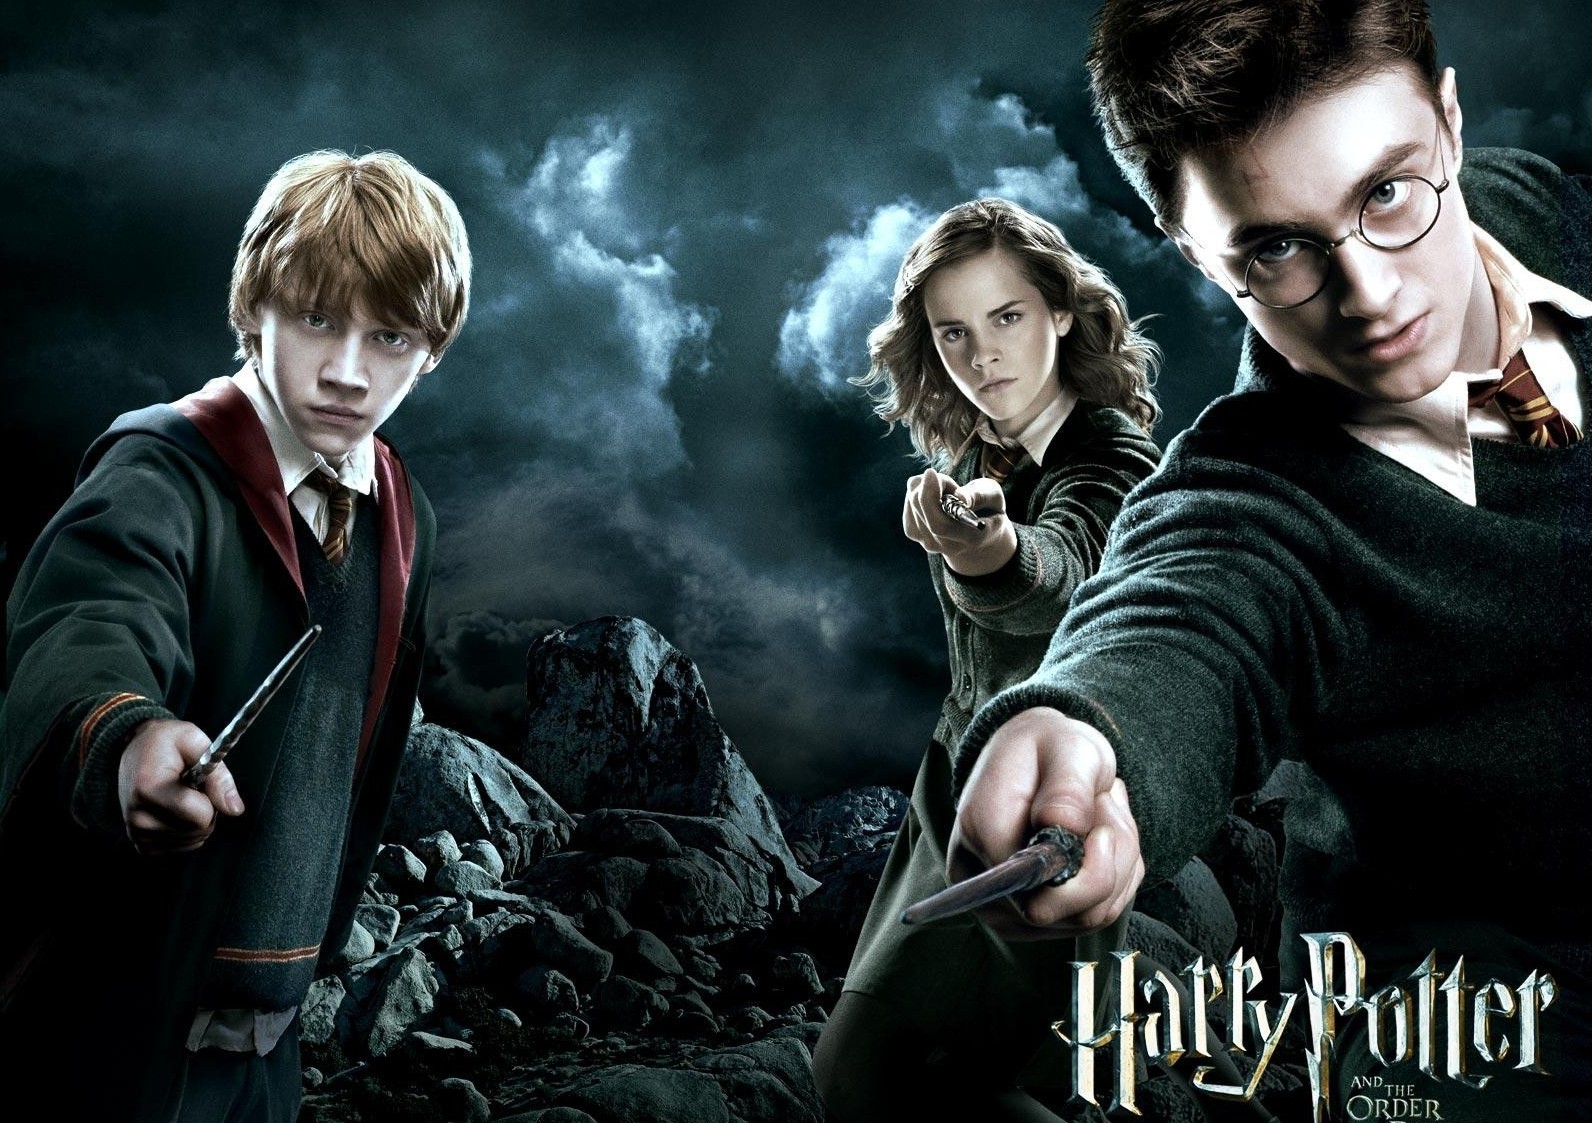 3d Screensavers Harry Potter Screensaver Then